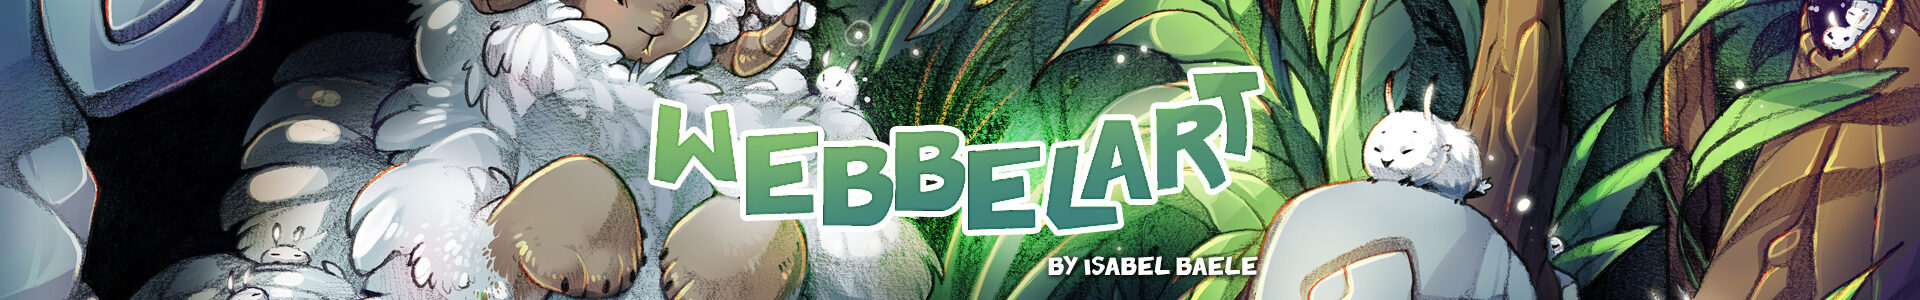 webbelart the sheppard illustration banner